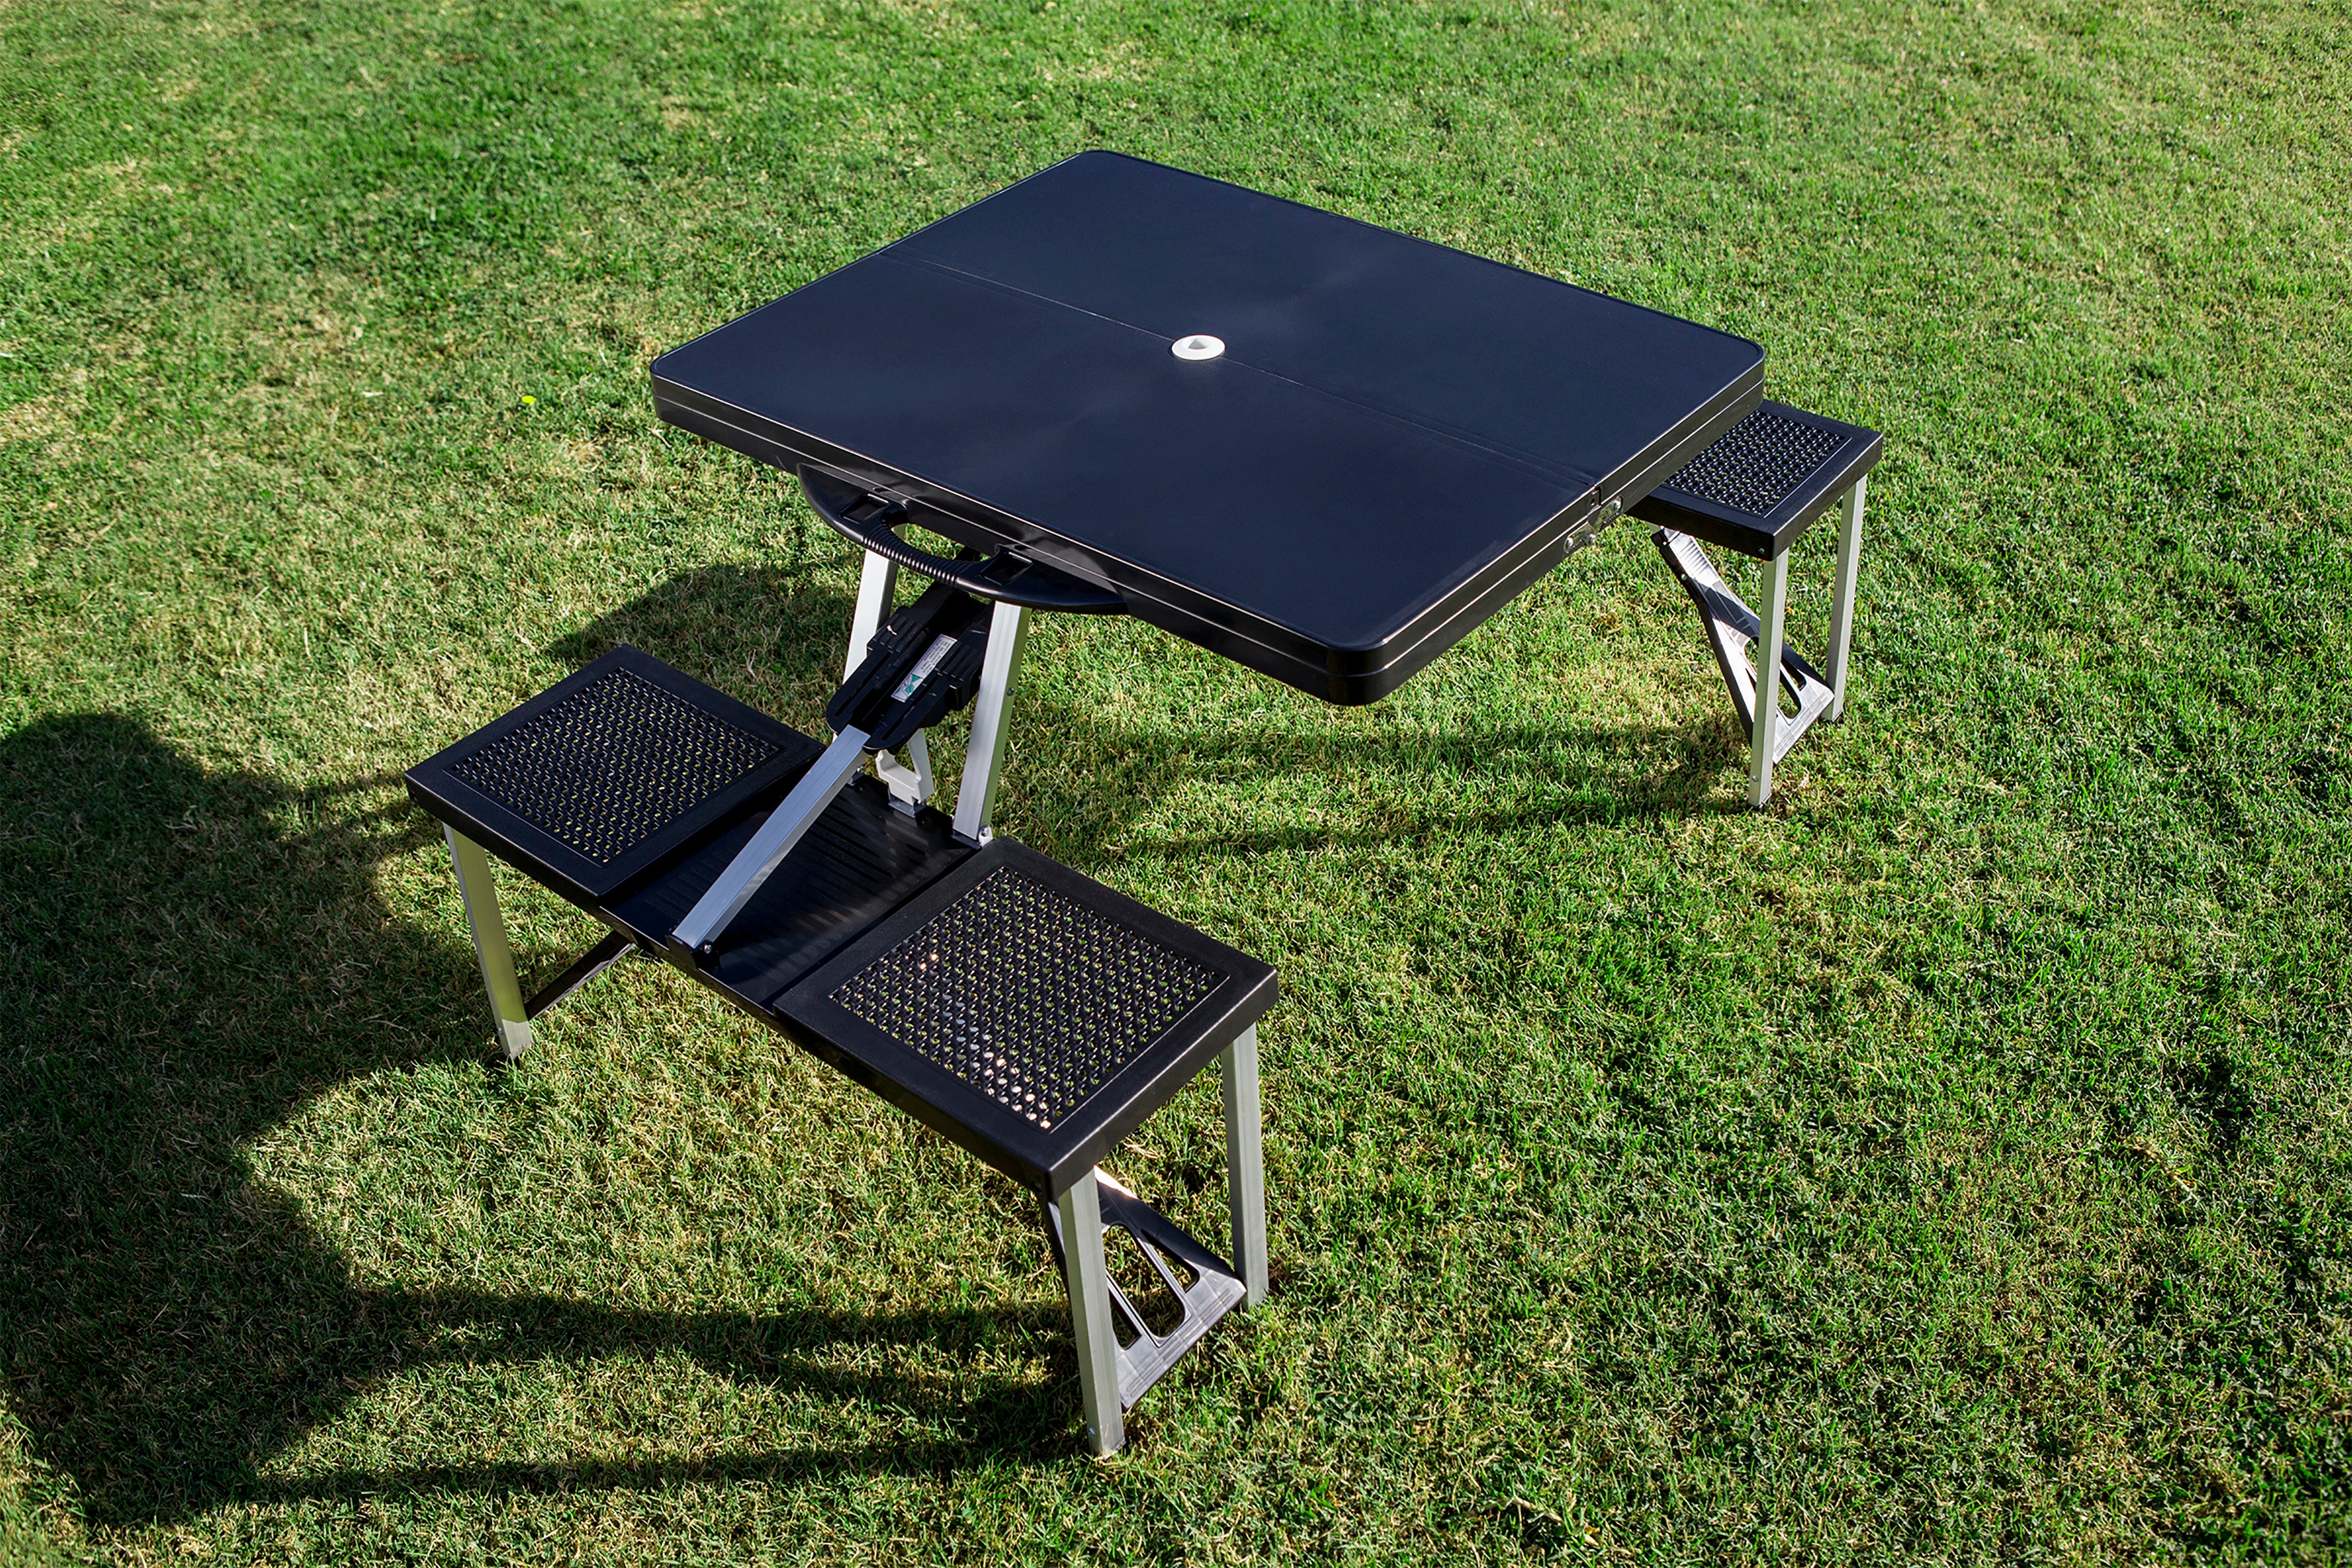 Miami Marlins Baseball Diamond - Picnic Table Portable Folding Table with Seats